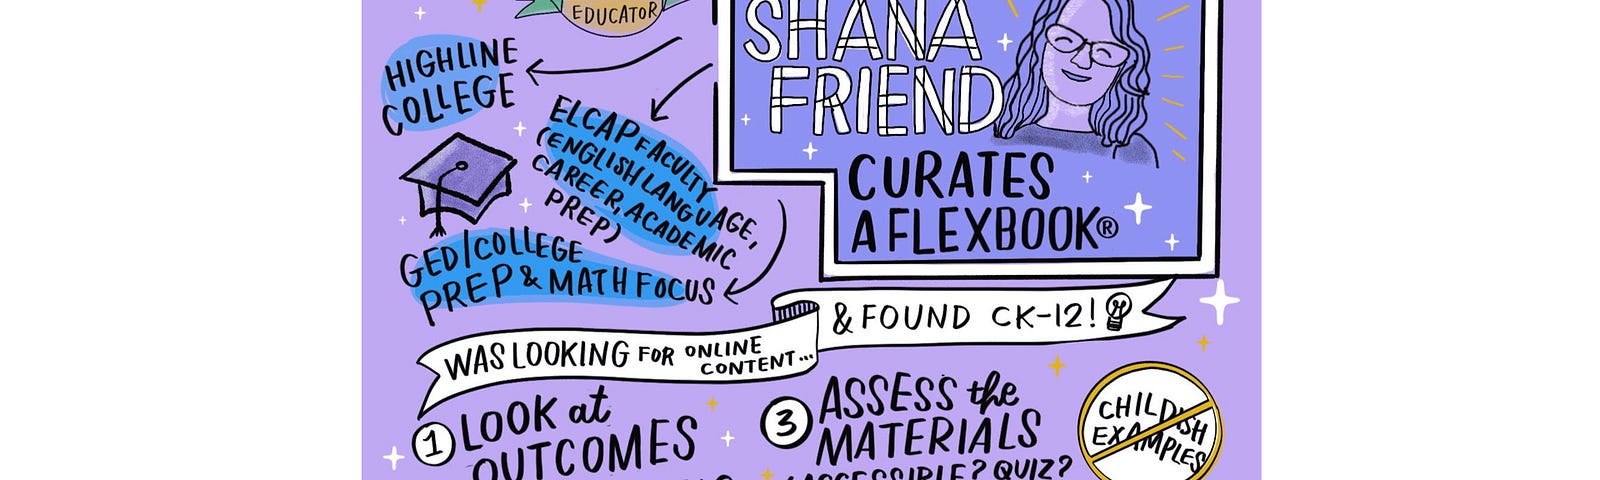 Steps for how Shana curates a FlexBook®